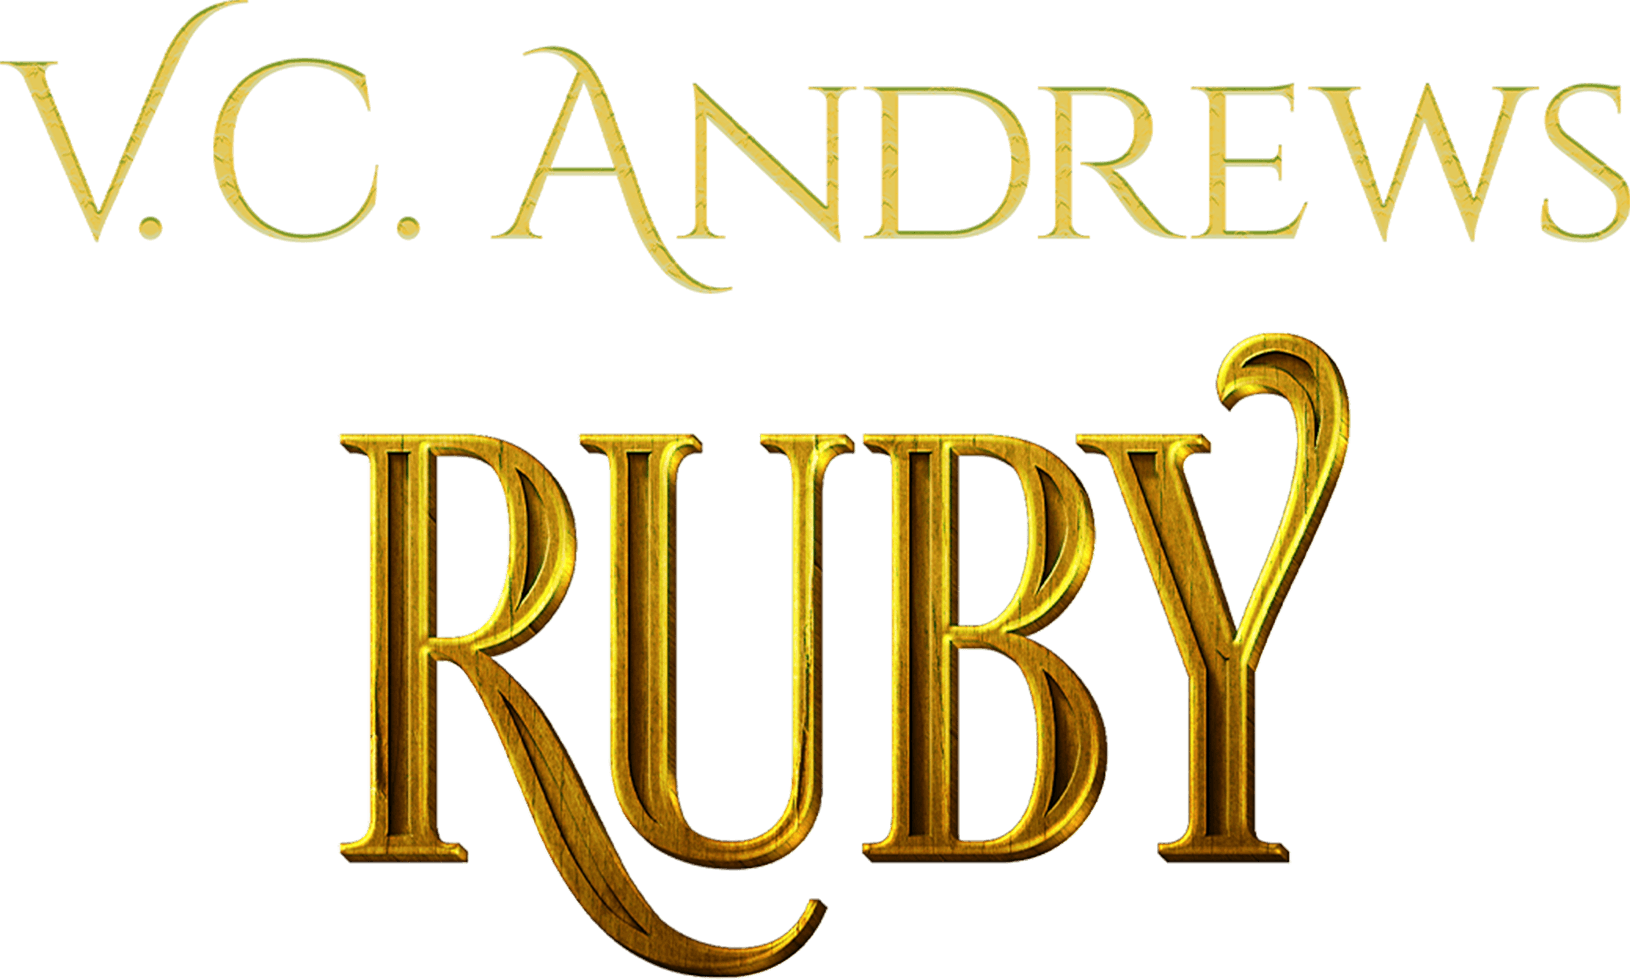 V.C. Andrews' Ruby logo